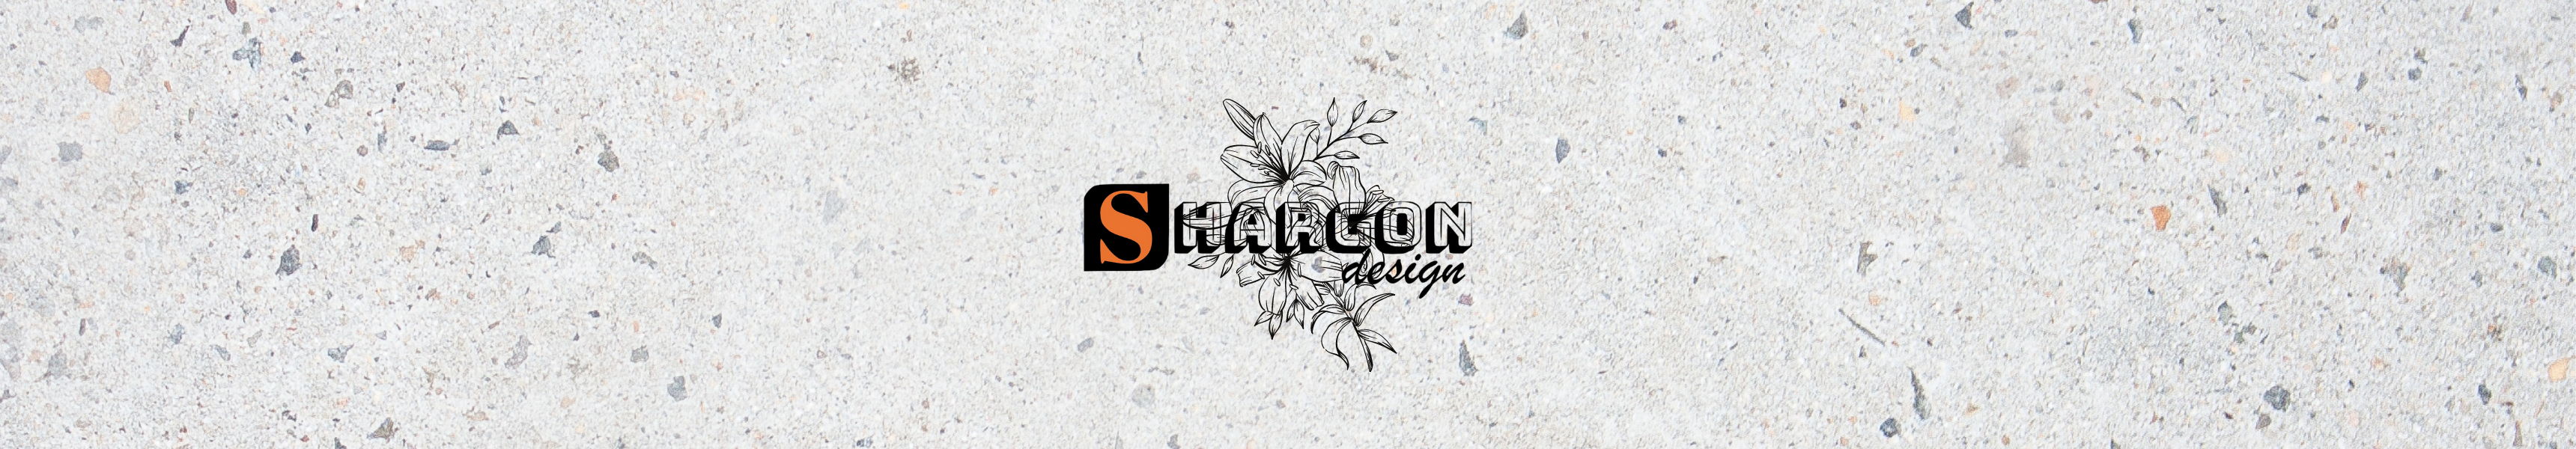 Shargon design na stronę (2)